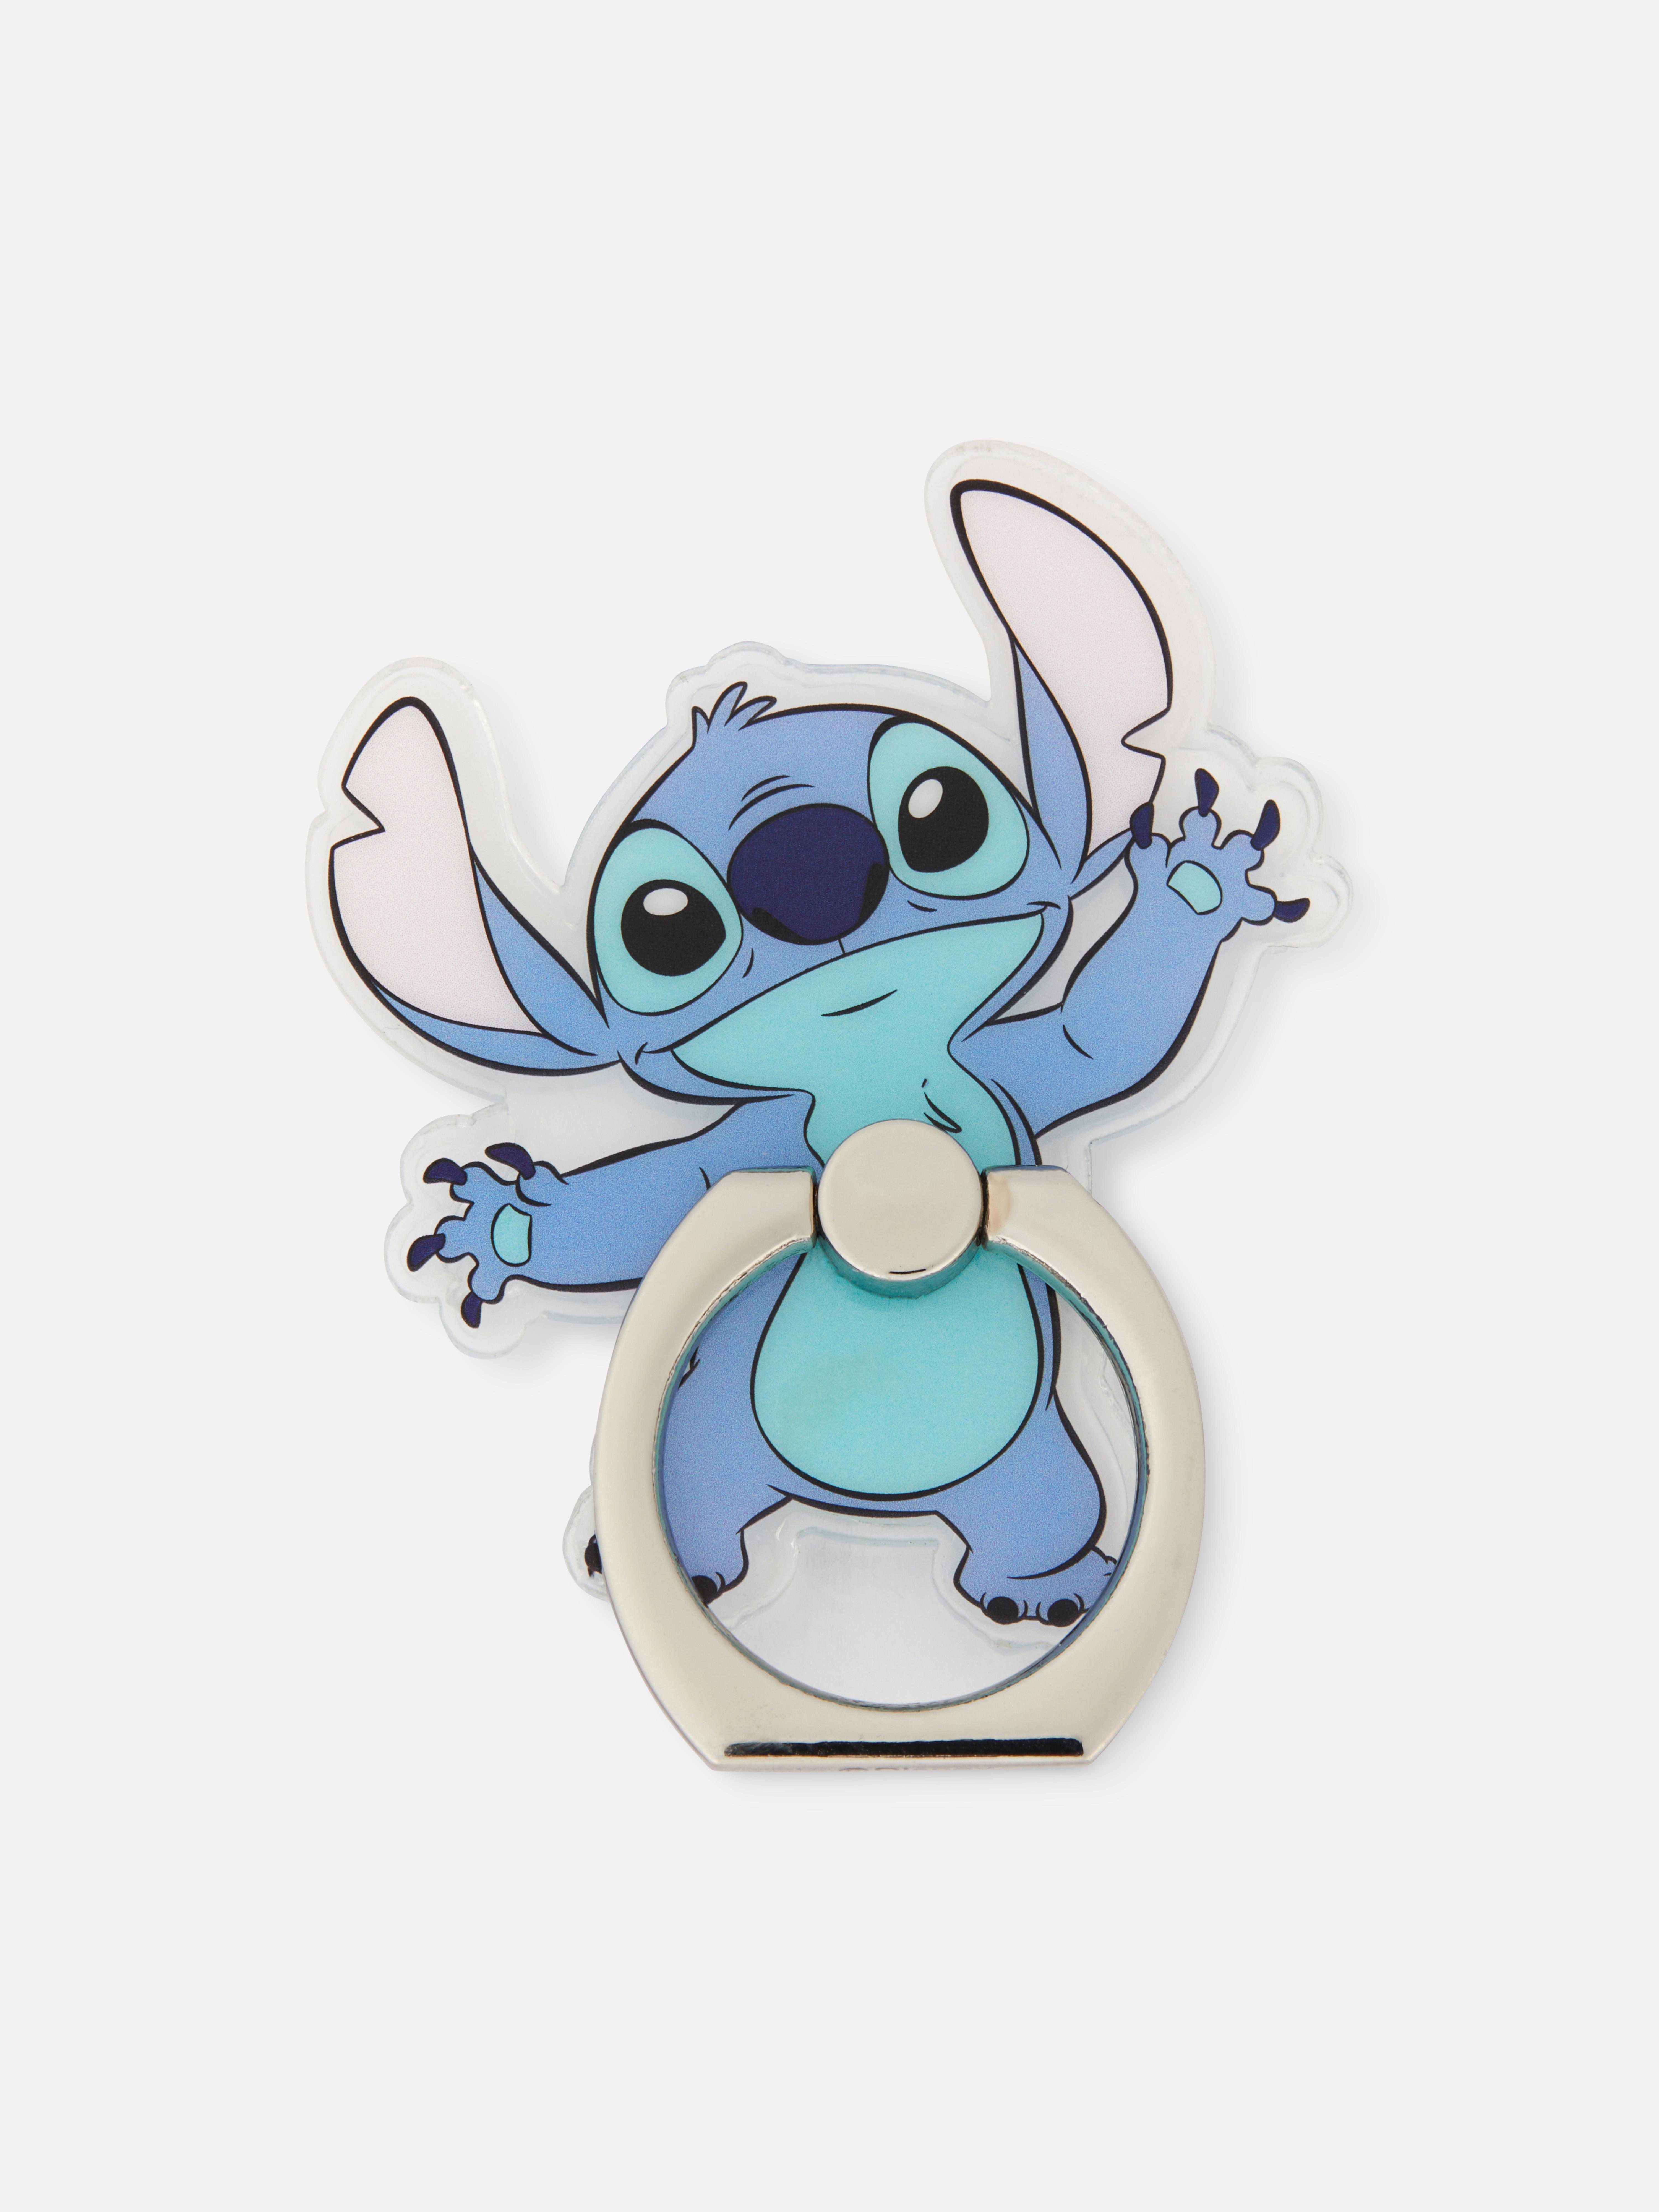 „Disney Lilo & Stitch“ Handy-Ringhalter